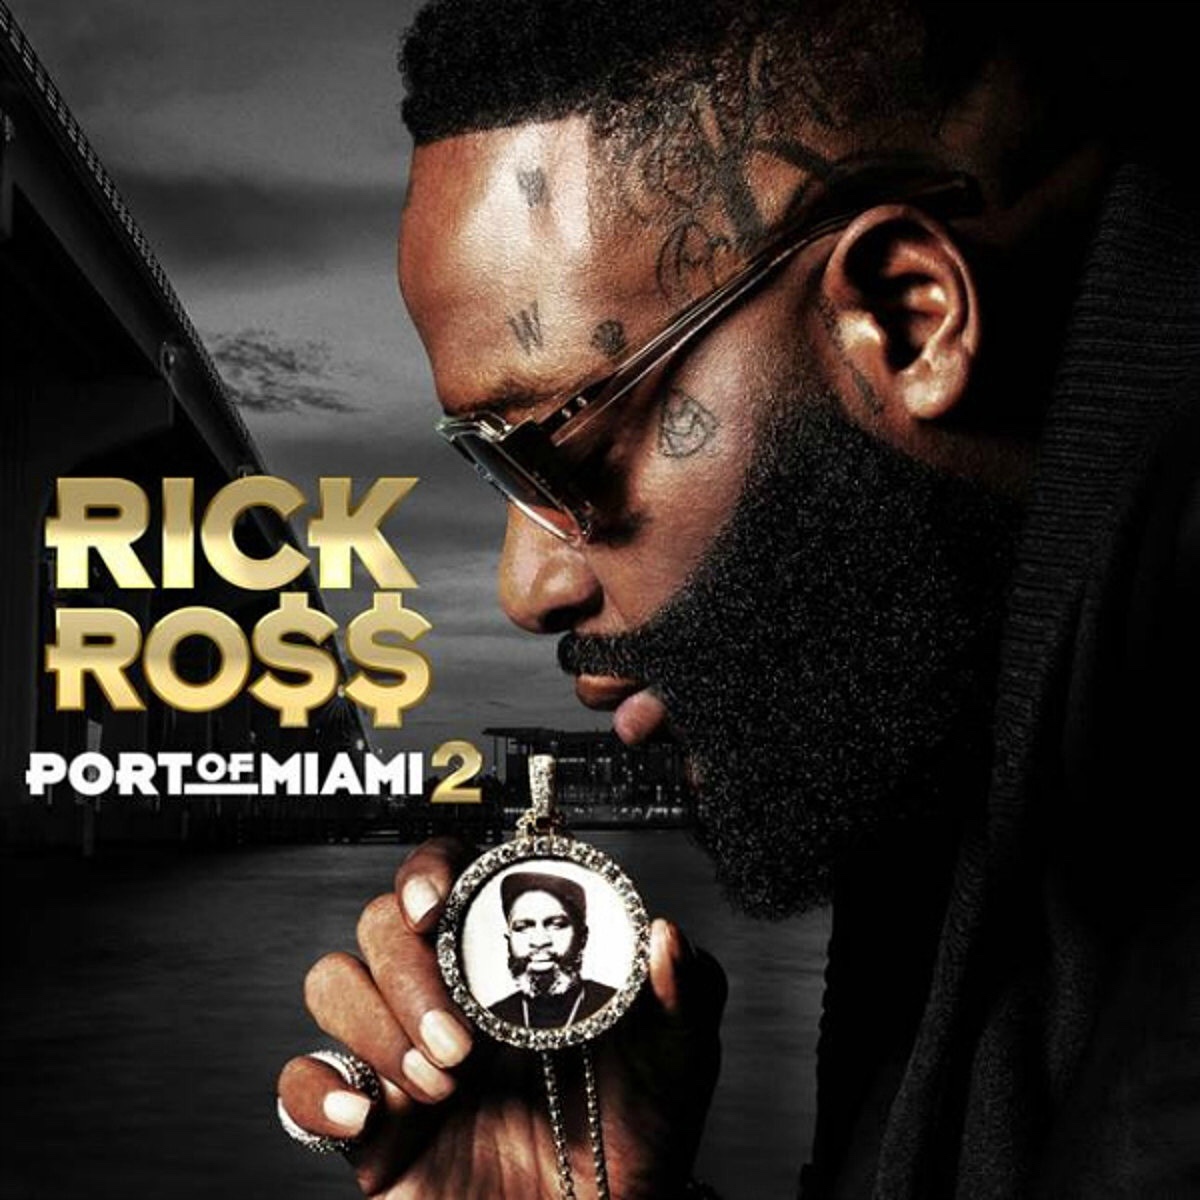 Rick Ross – Port Of Miami 2 (Album Review)